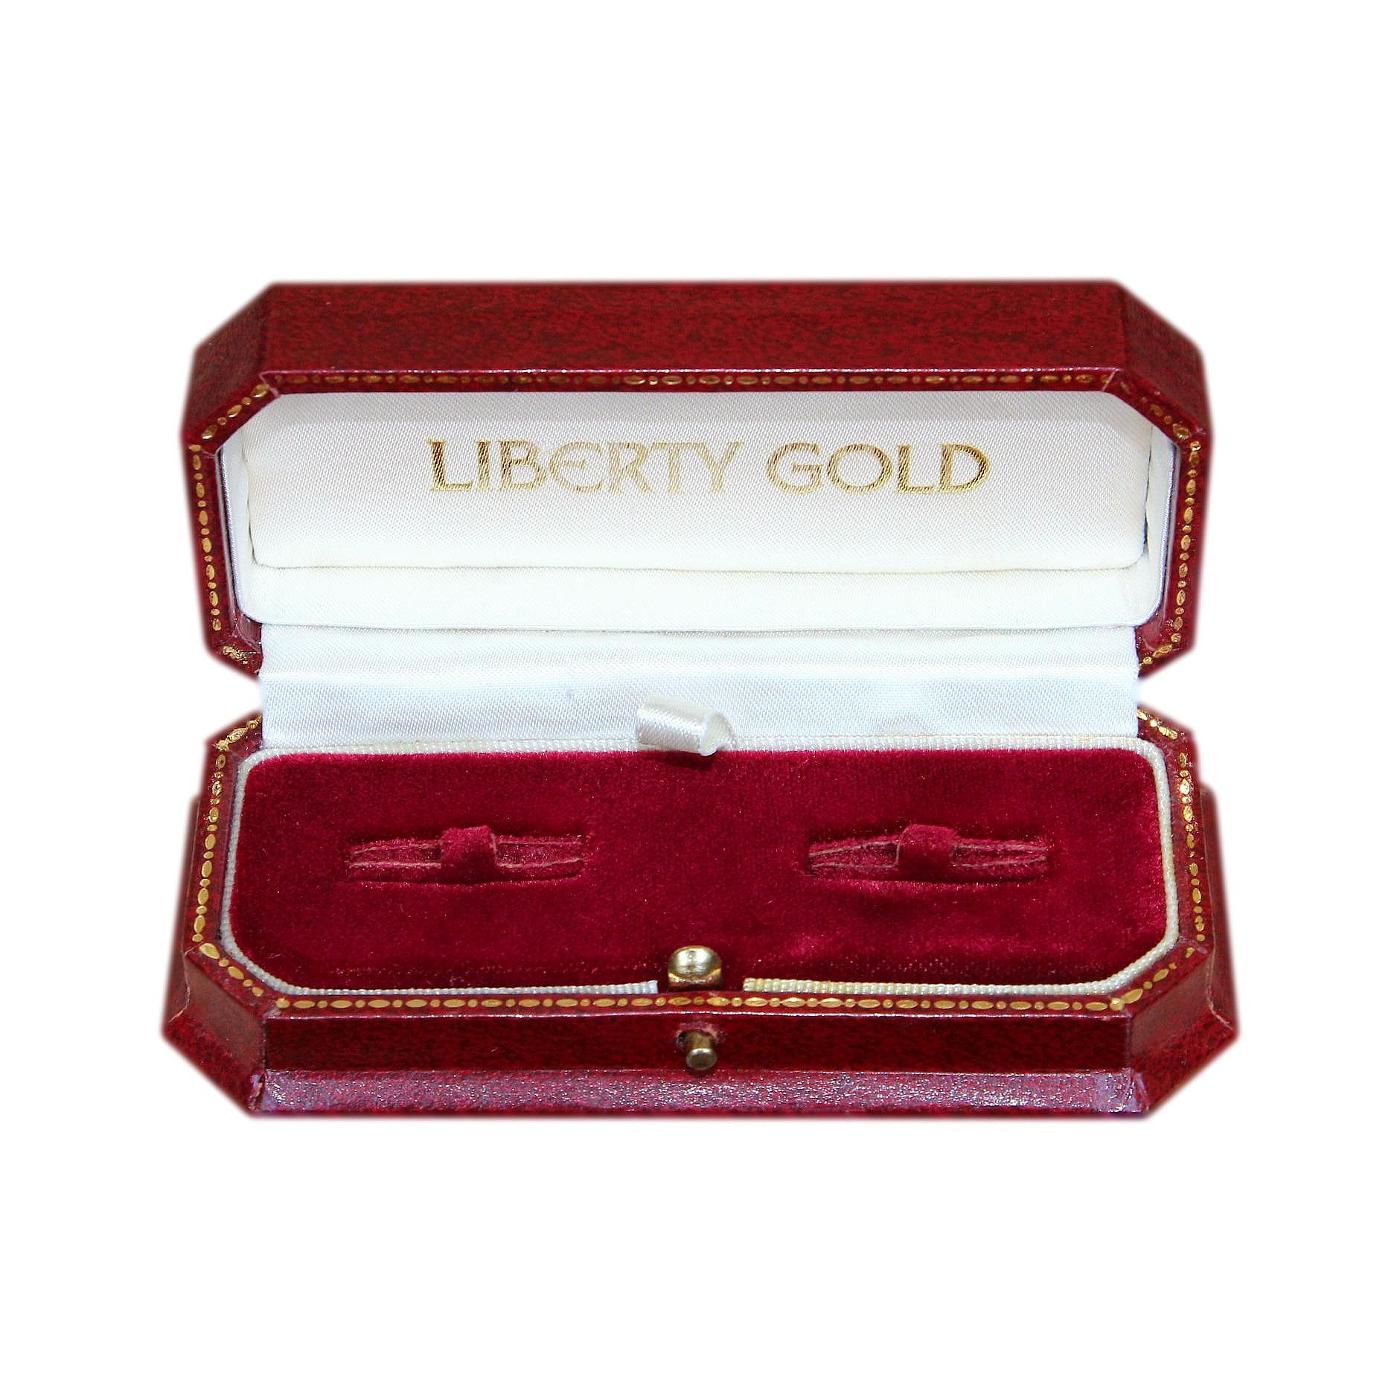 Stylish Liberty Gold Presentation Box For Cufflinks or Earrings